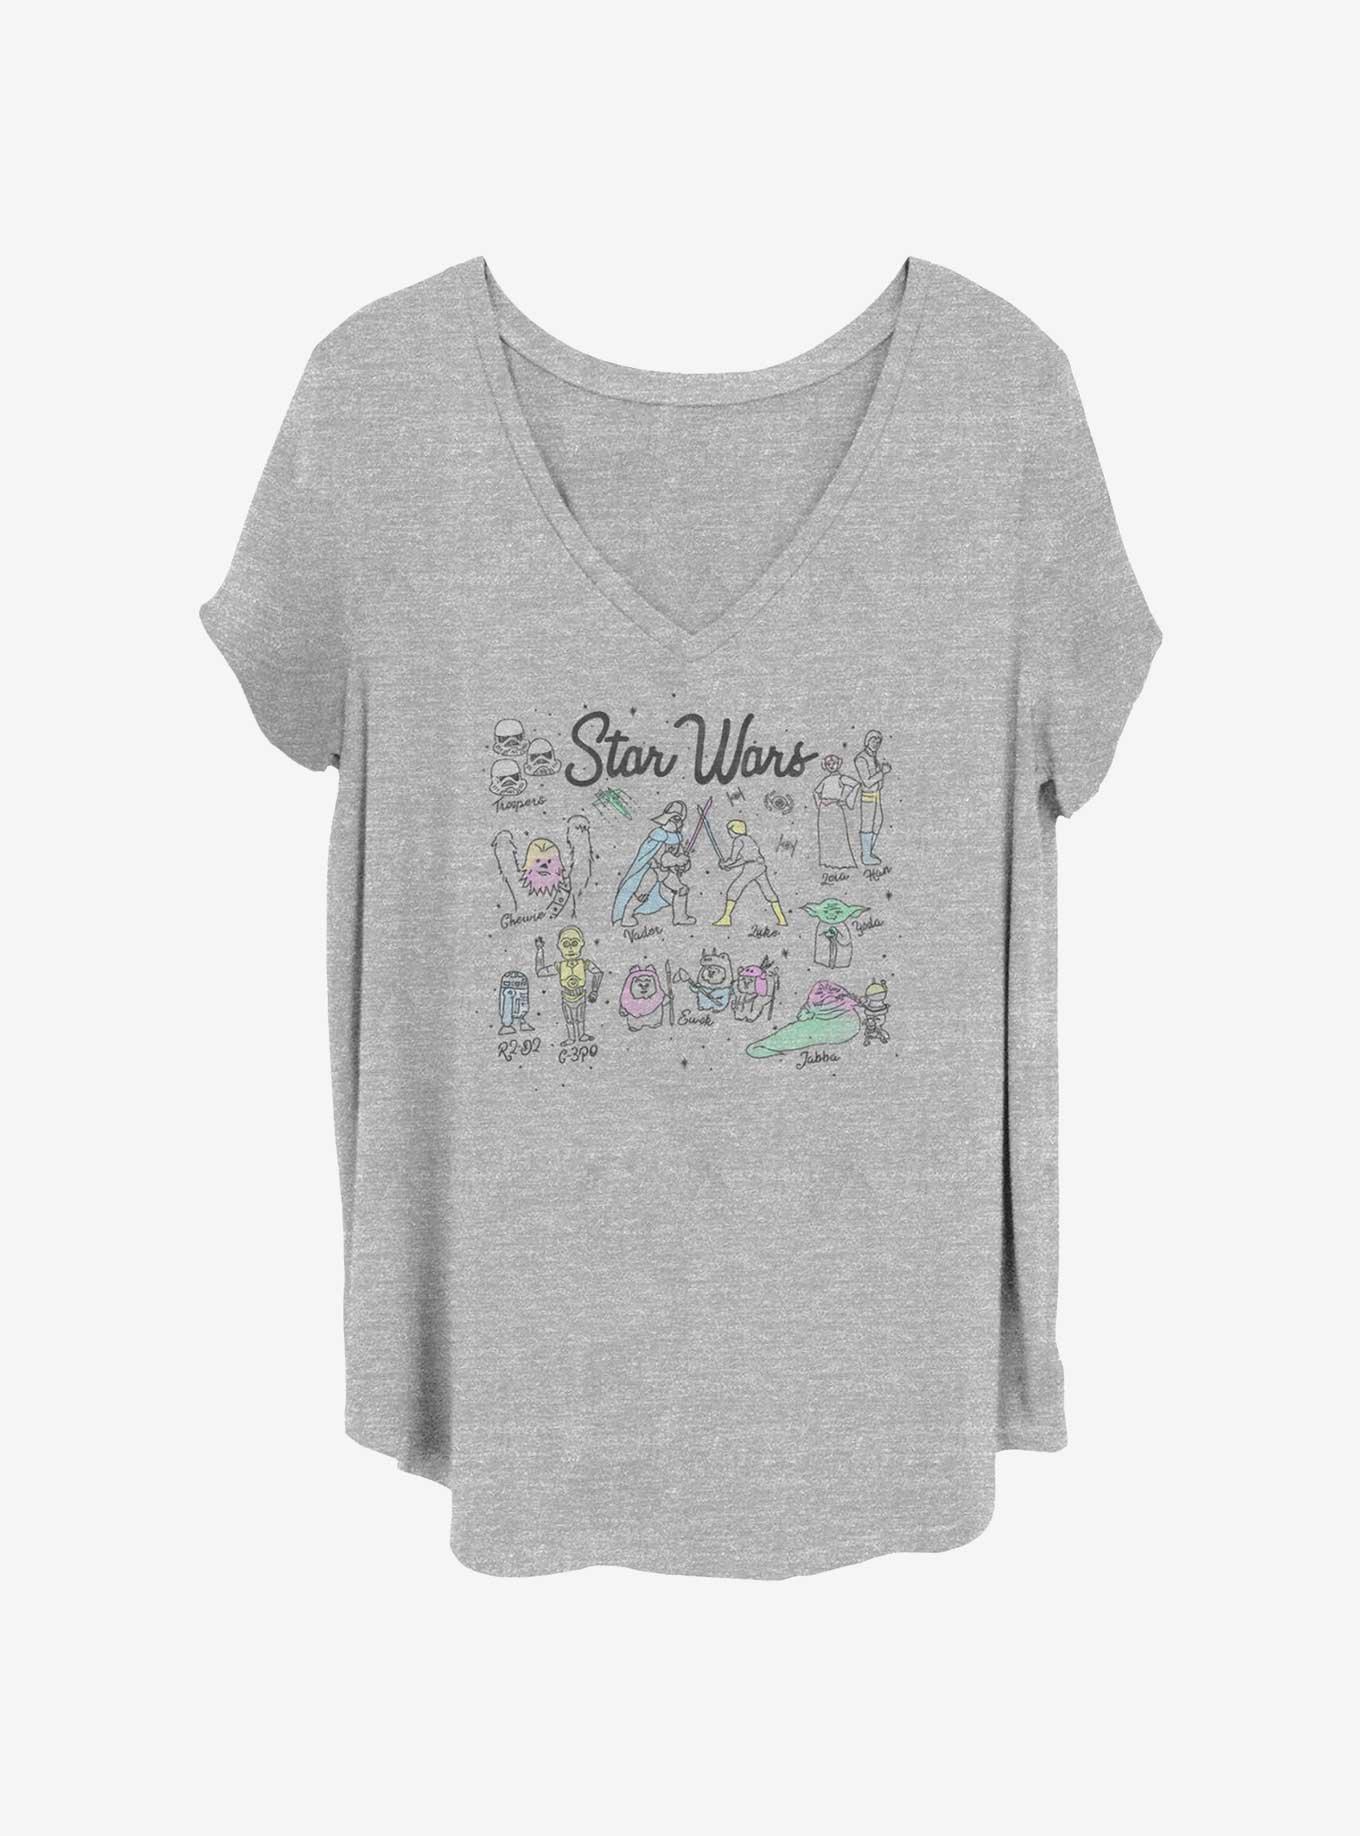 Star Wars Doodle Collage Girls T-Shirt Plus